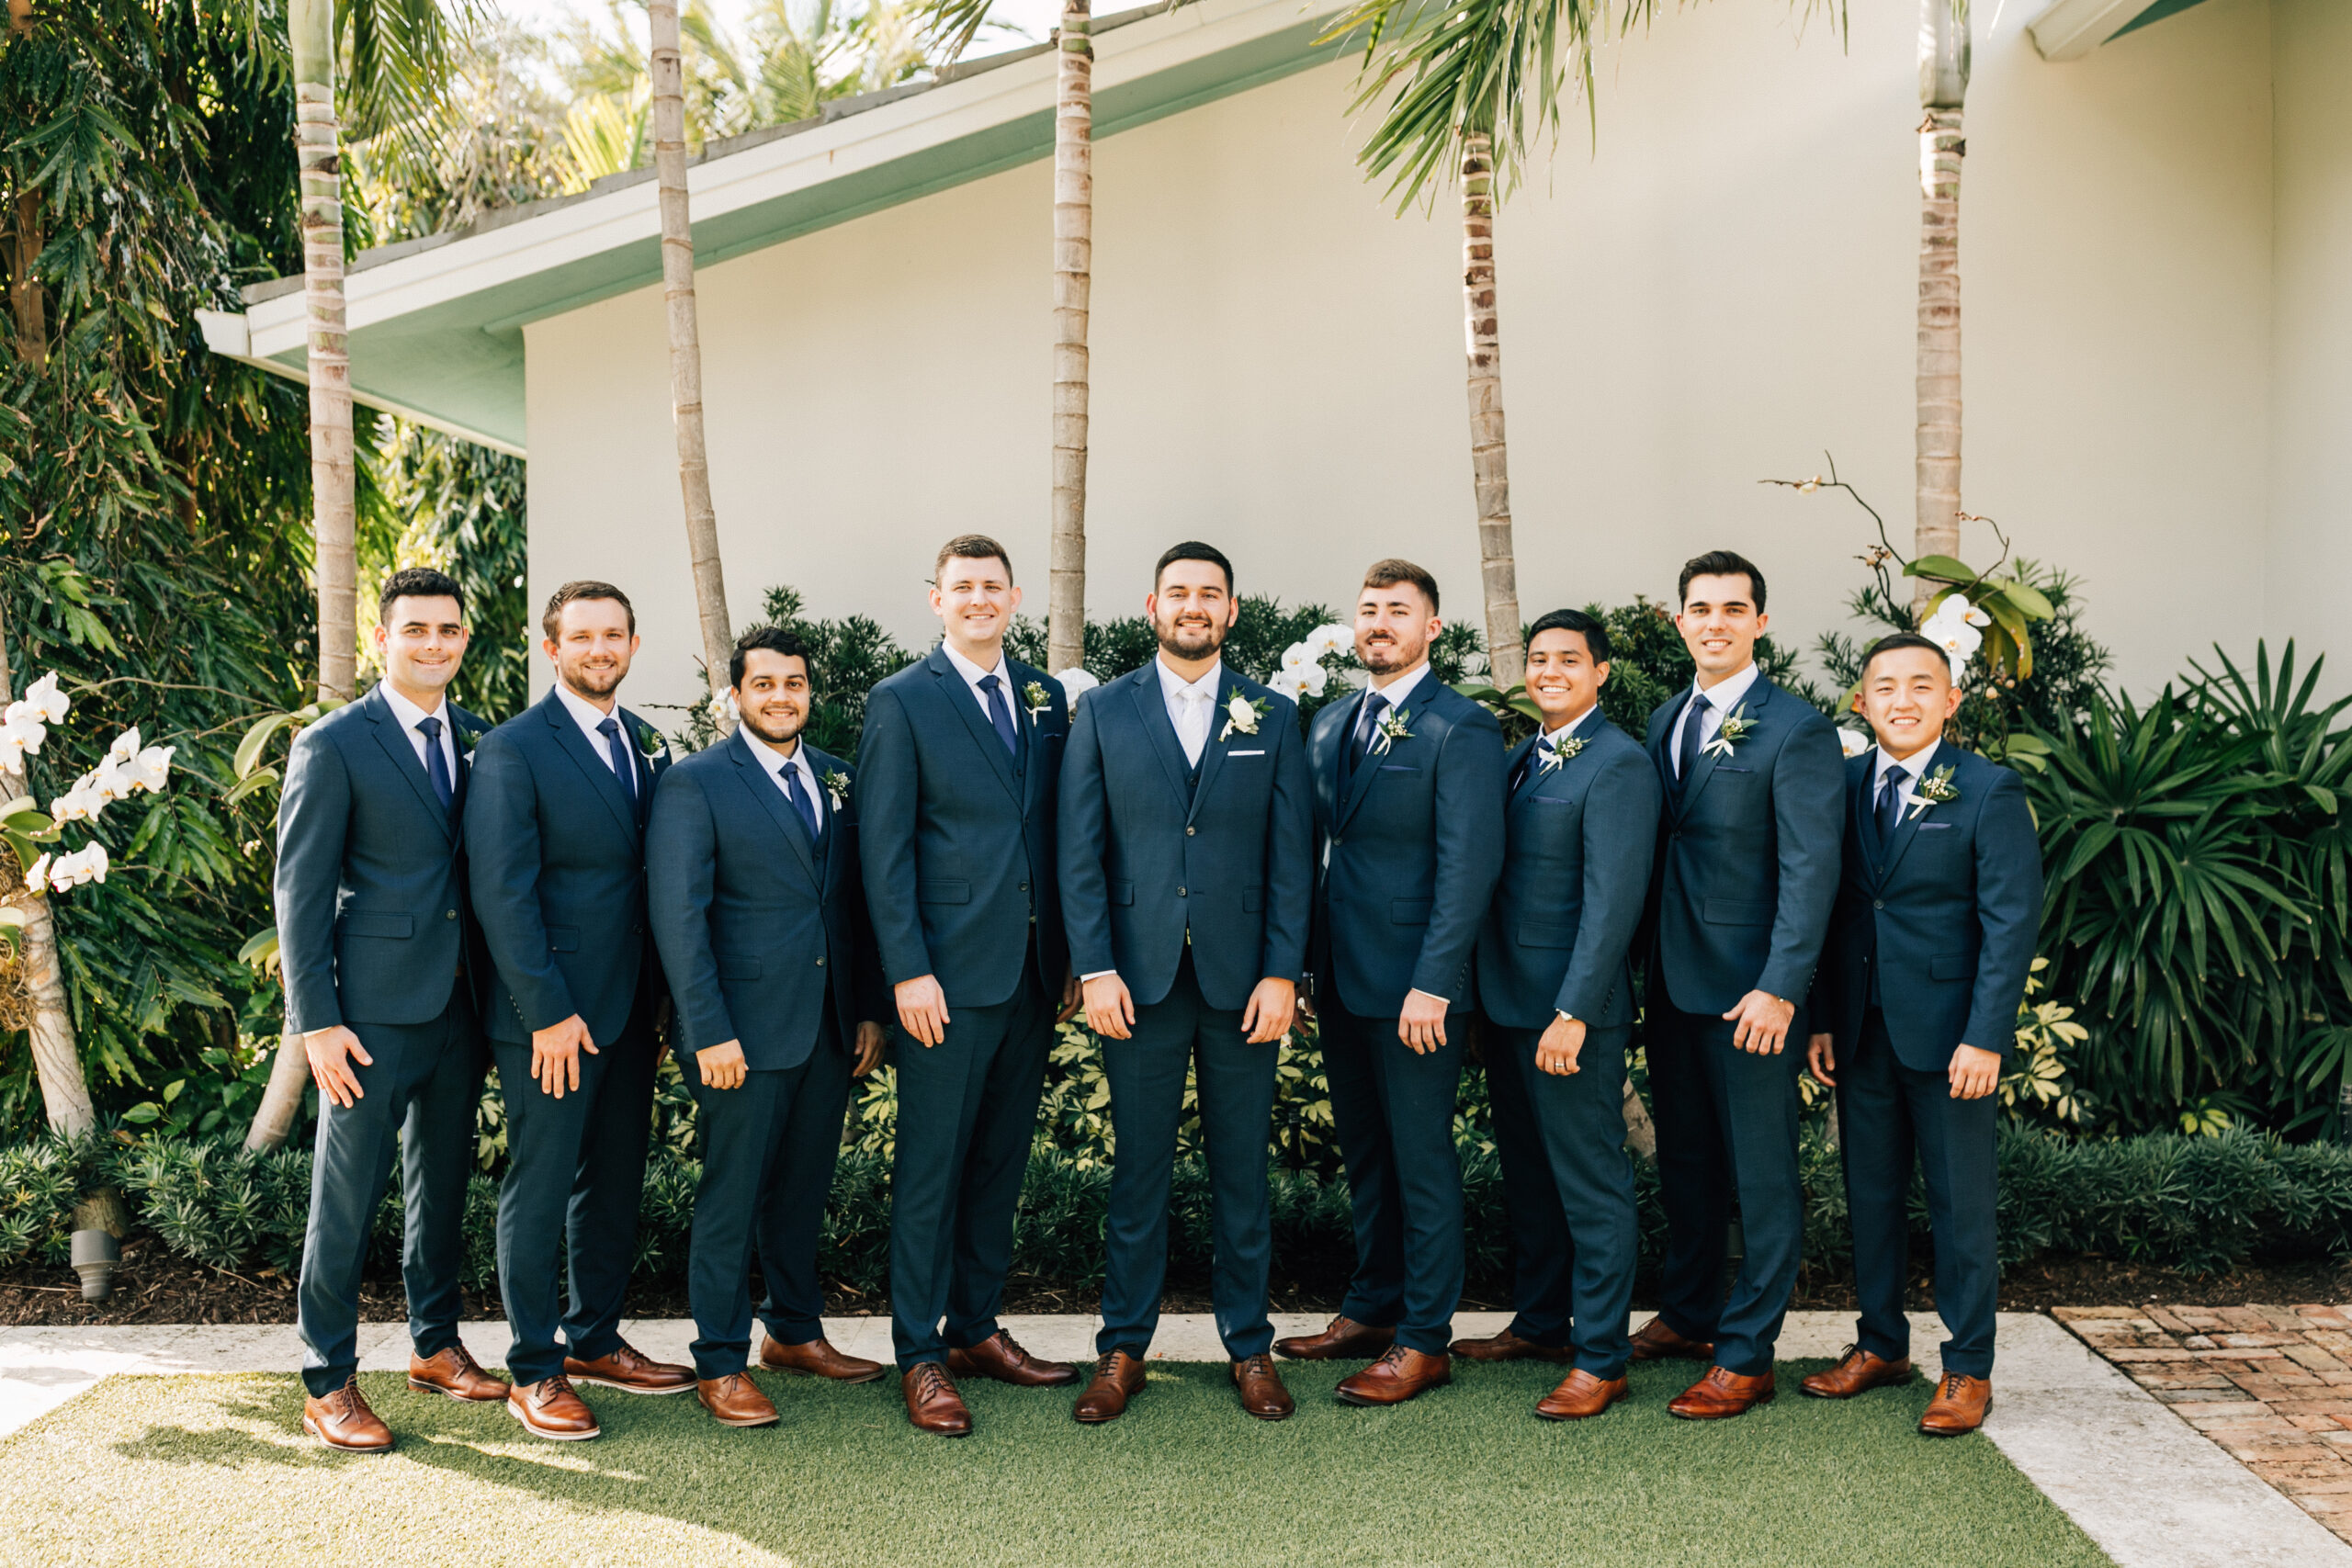 Groom and groomsmen posing outside in greenery wearing matching navy blue wedding suits